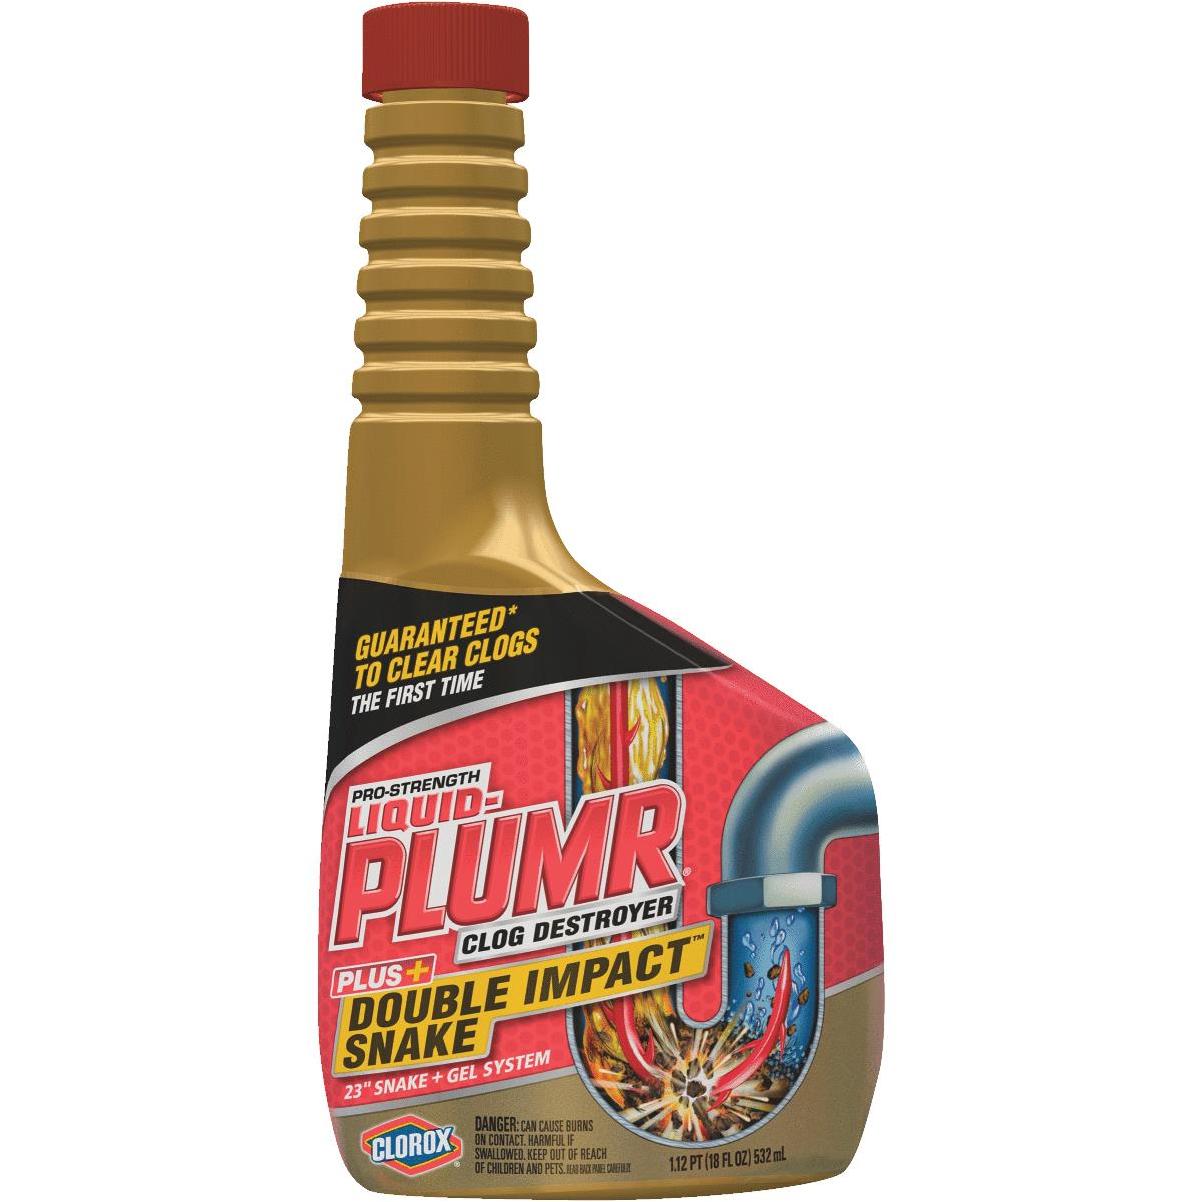 Liquid-Plumr Pro-Strength Clog Destroyer Liquid Drain Cleaner Gel, 80 OZ